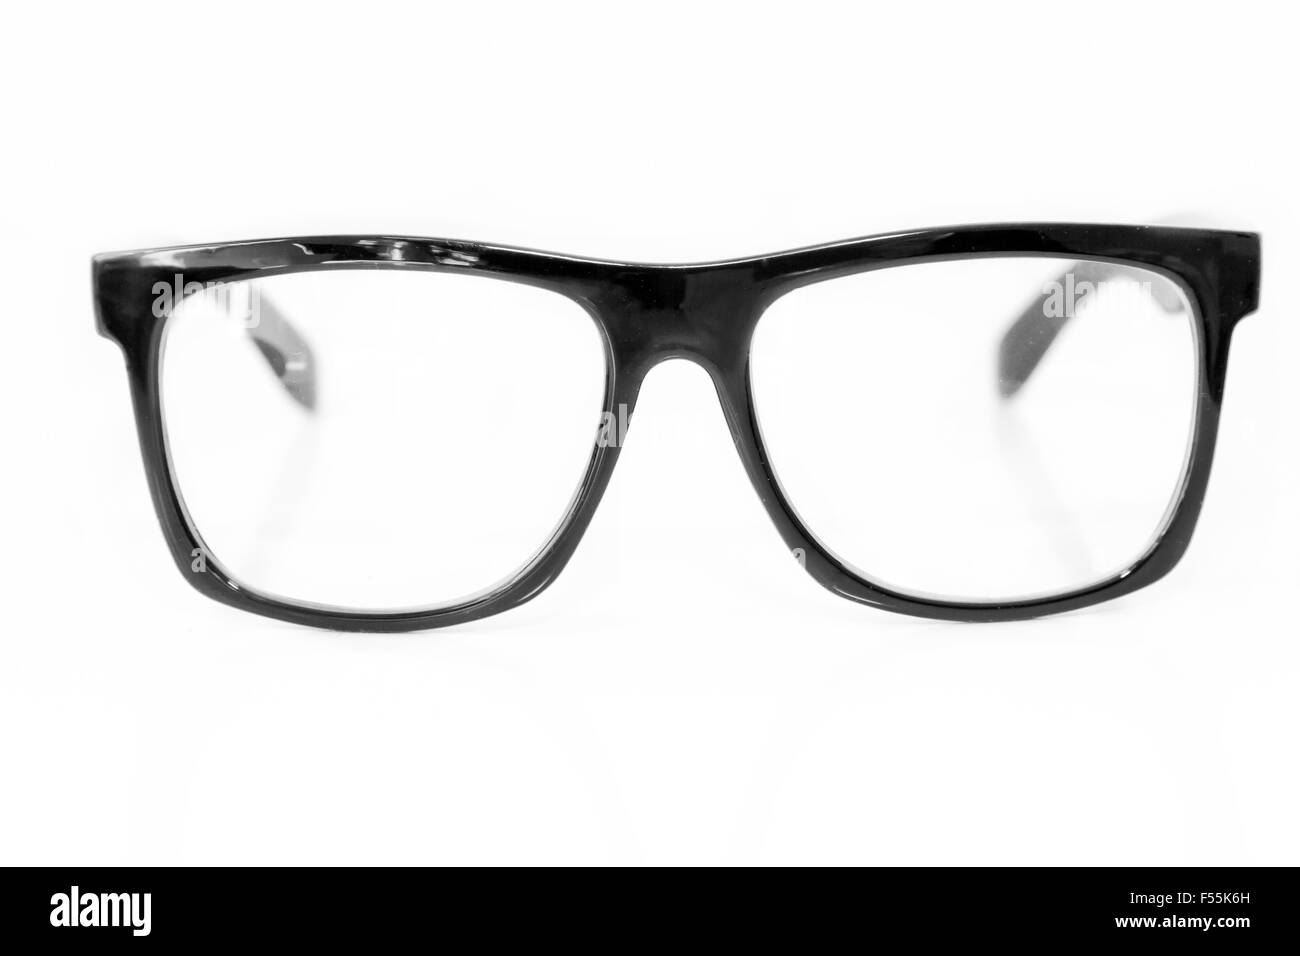 Glasses isolated on white Stock Photo